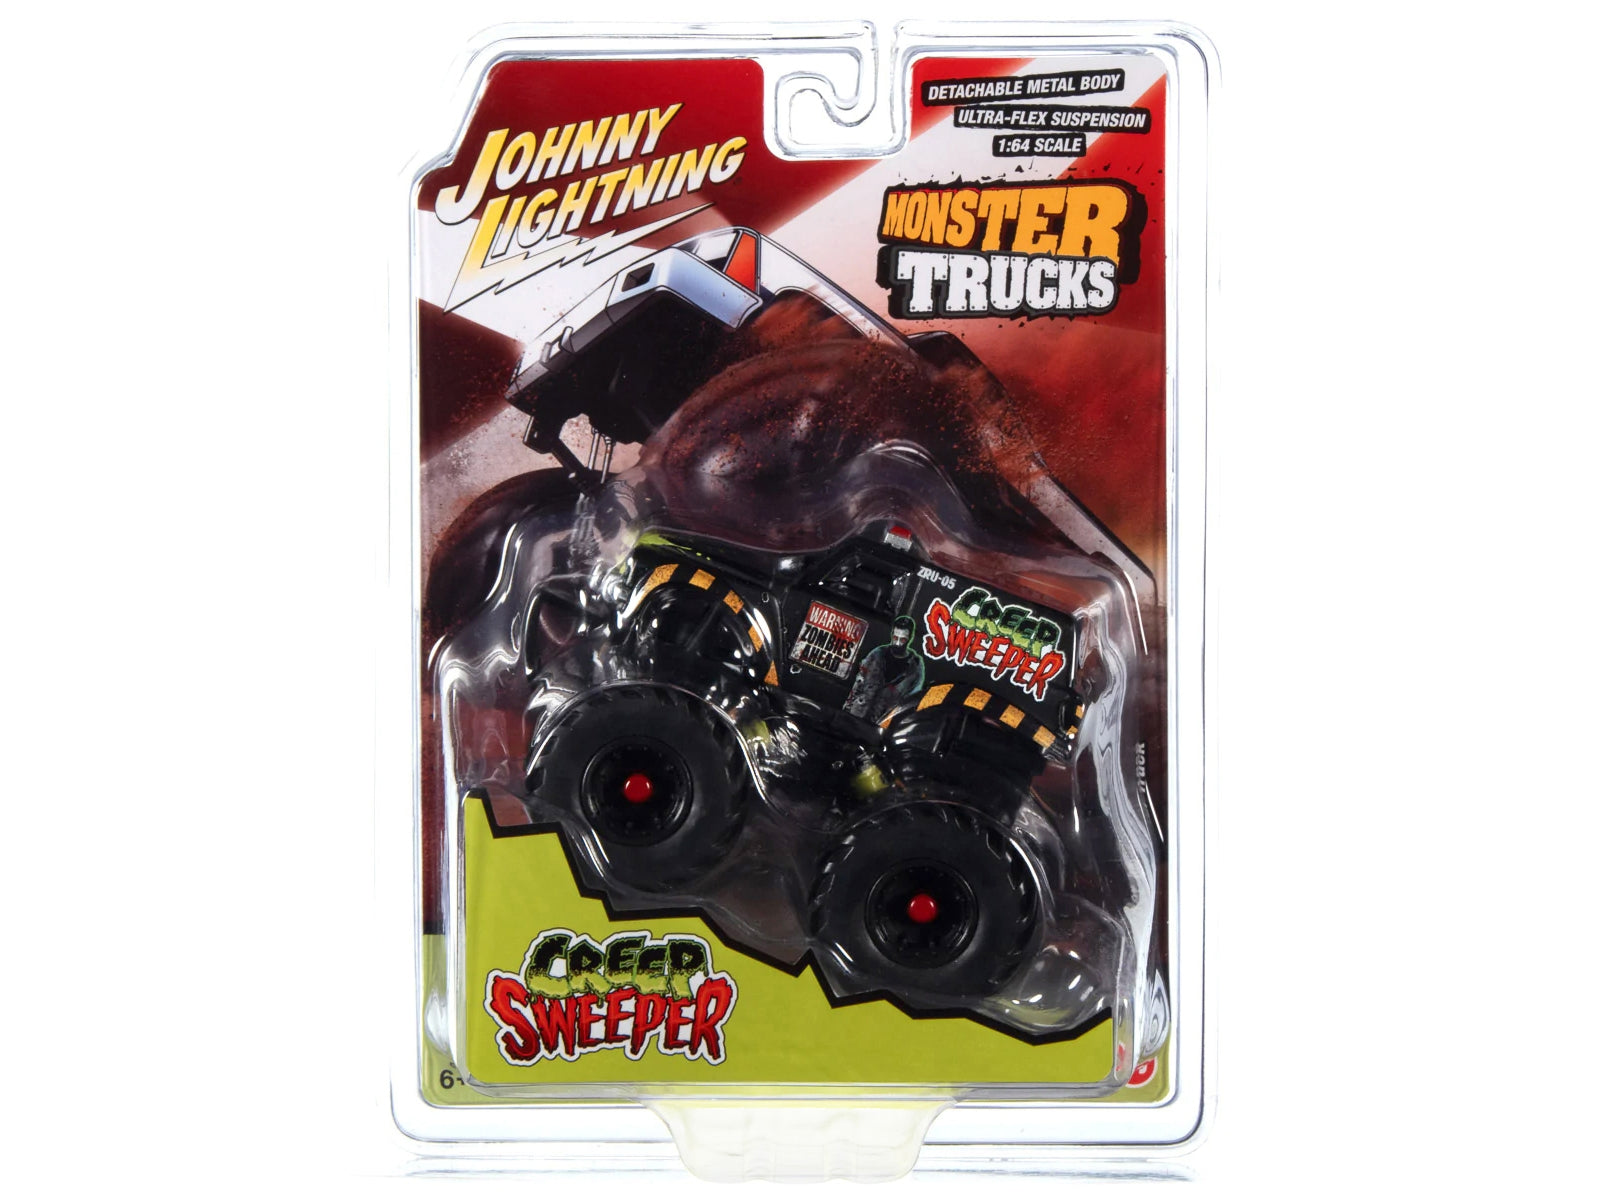 "Creep Sweeper" Monster Truck "Zombie Response Unit" with Black Wheels "Monster Trucks" Series 1/64 Diecast Model by Johnny Lightning Johnny Lightning